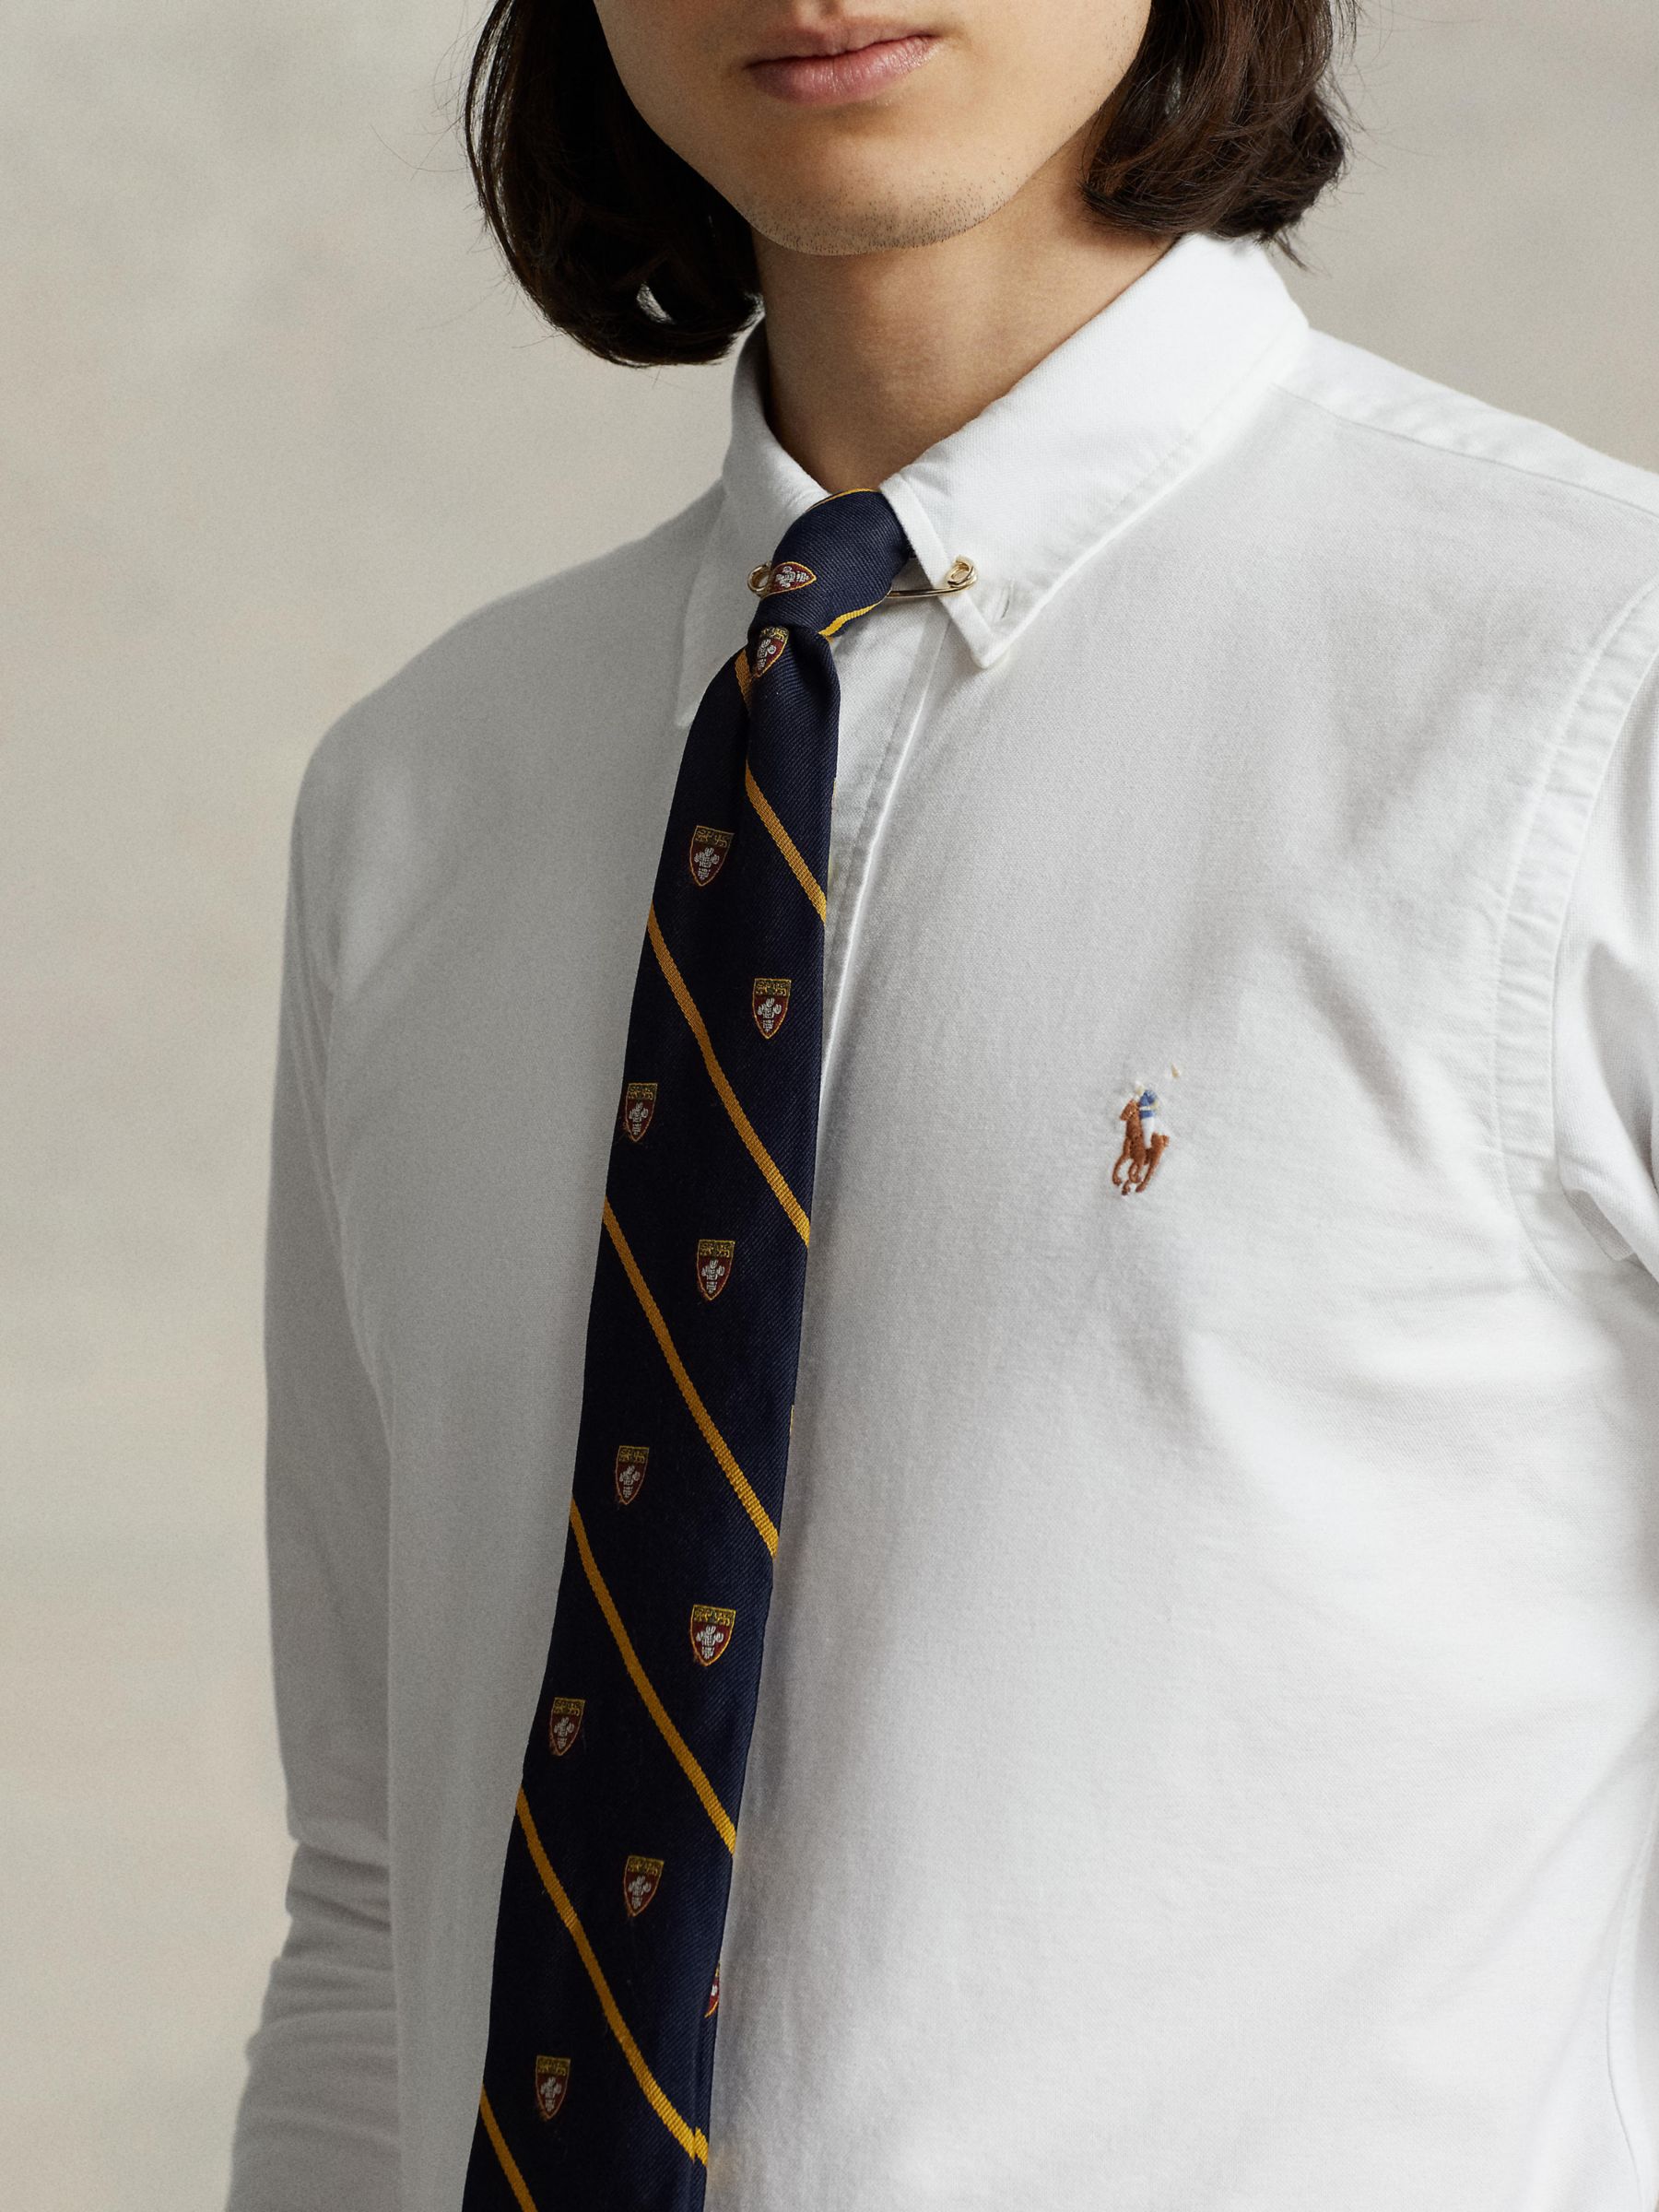 Polo Ralph Lauren Custom Fit Oxford Shirt, White, S